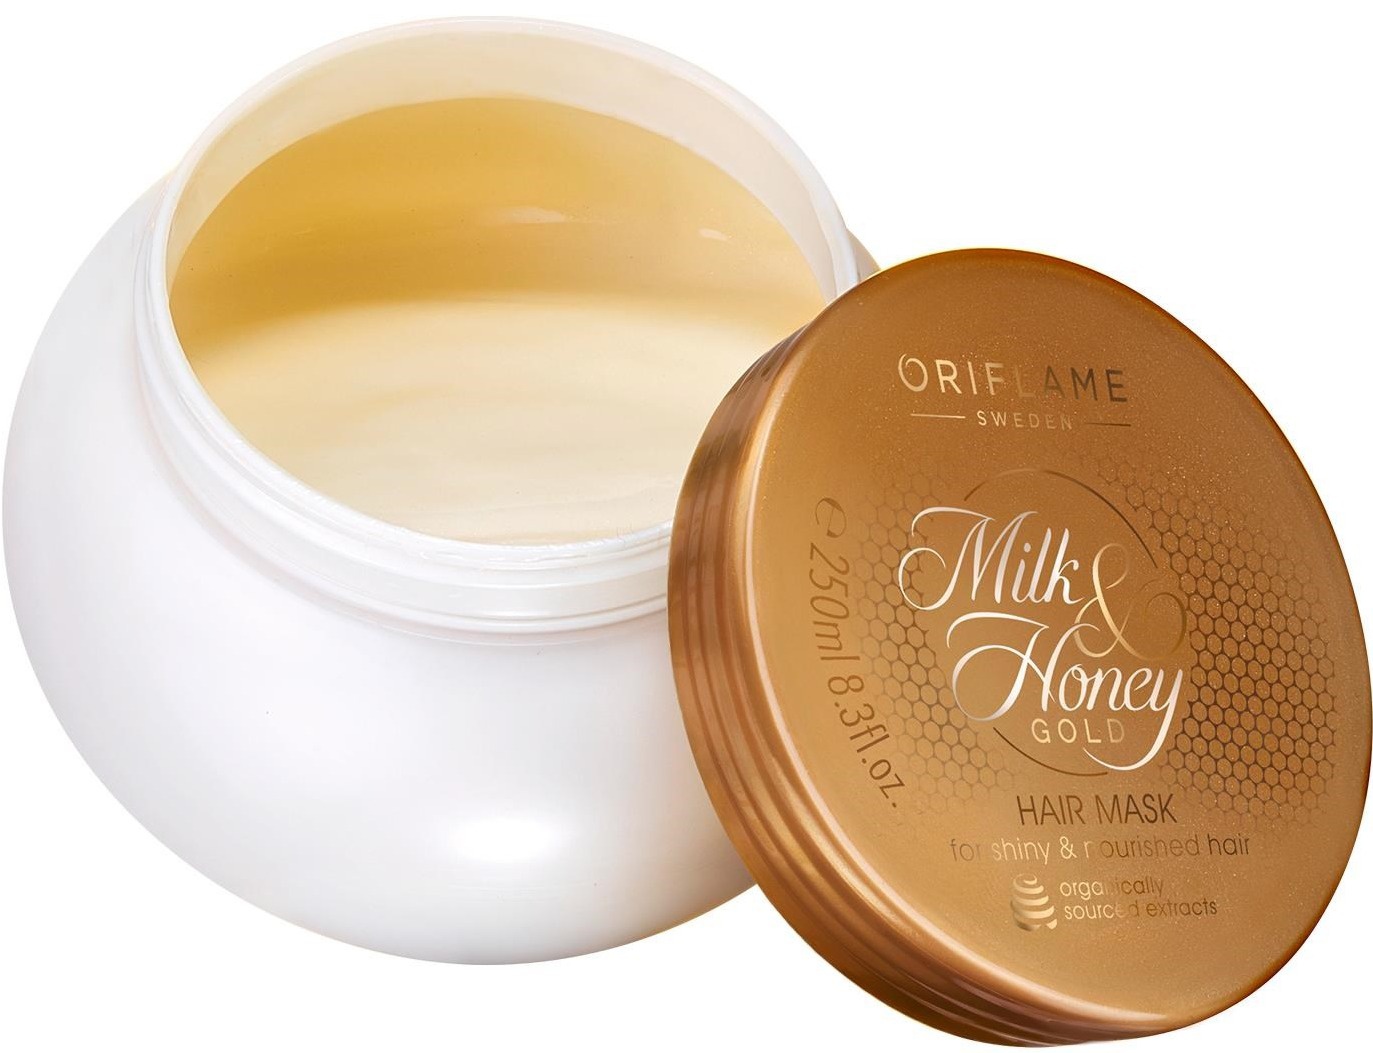 Oriflame Milk & Honey Gold Hair Mask